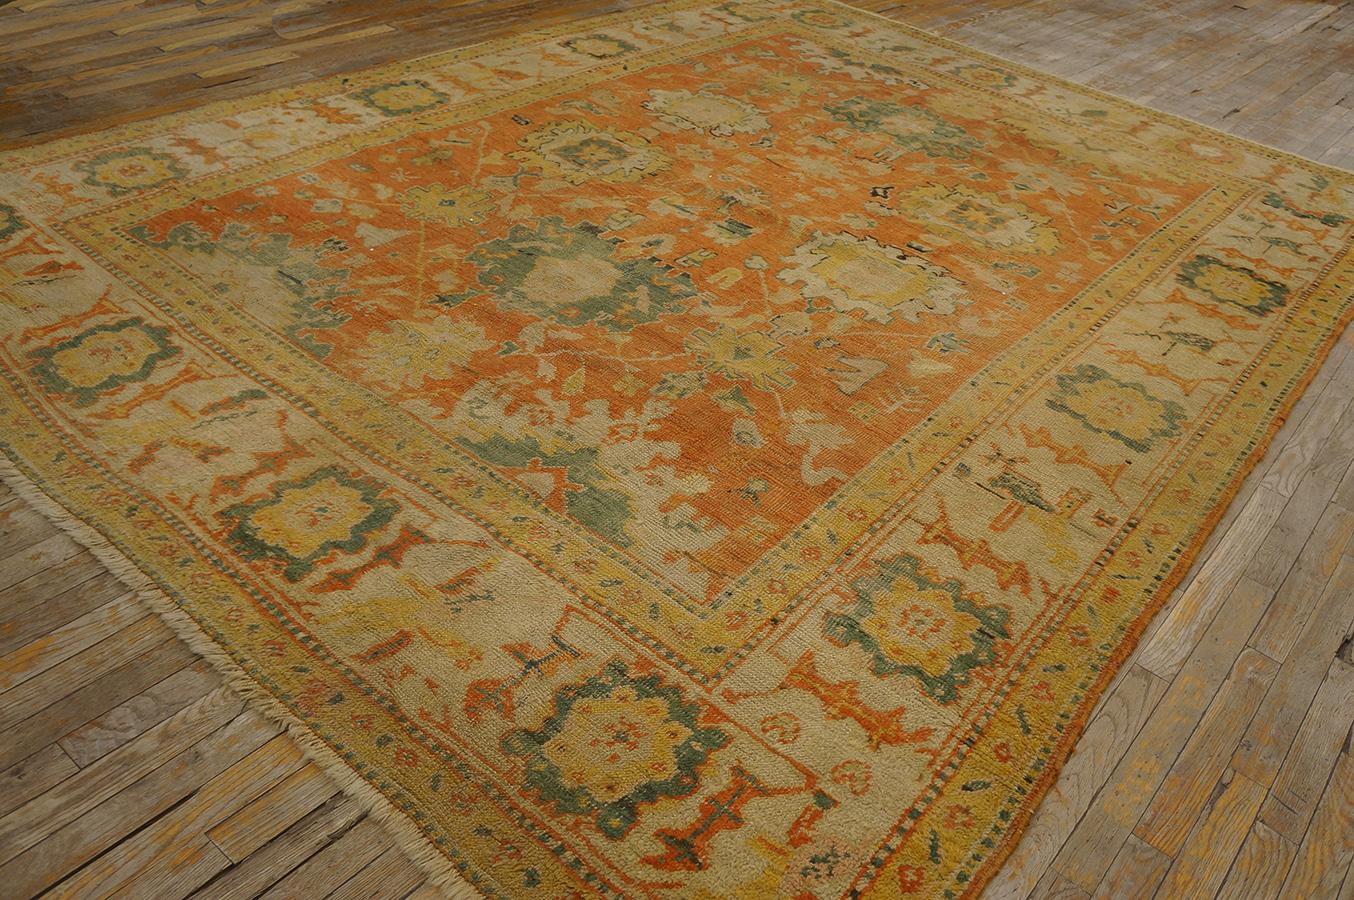 Late 19th Century Turkish Anatolian Oushak Carpet (8'4''x 11'2'' - 254 x 340 cm) For Sale 2